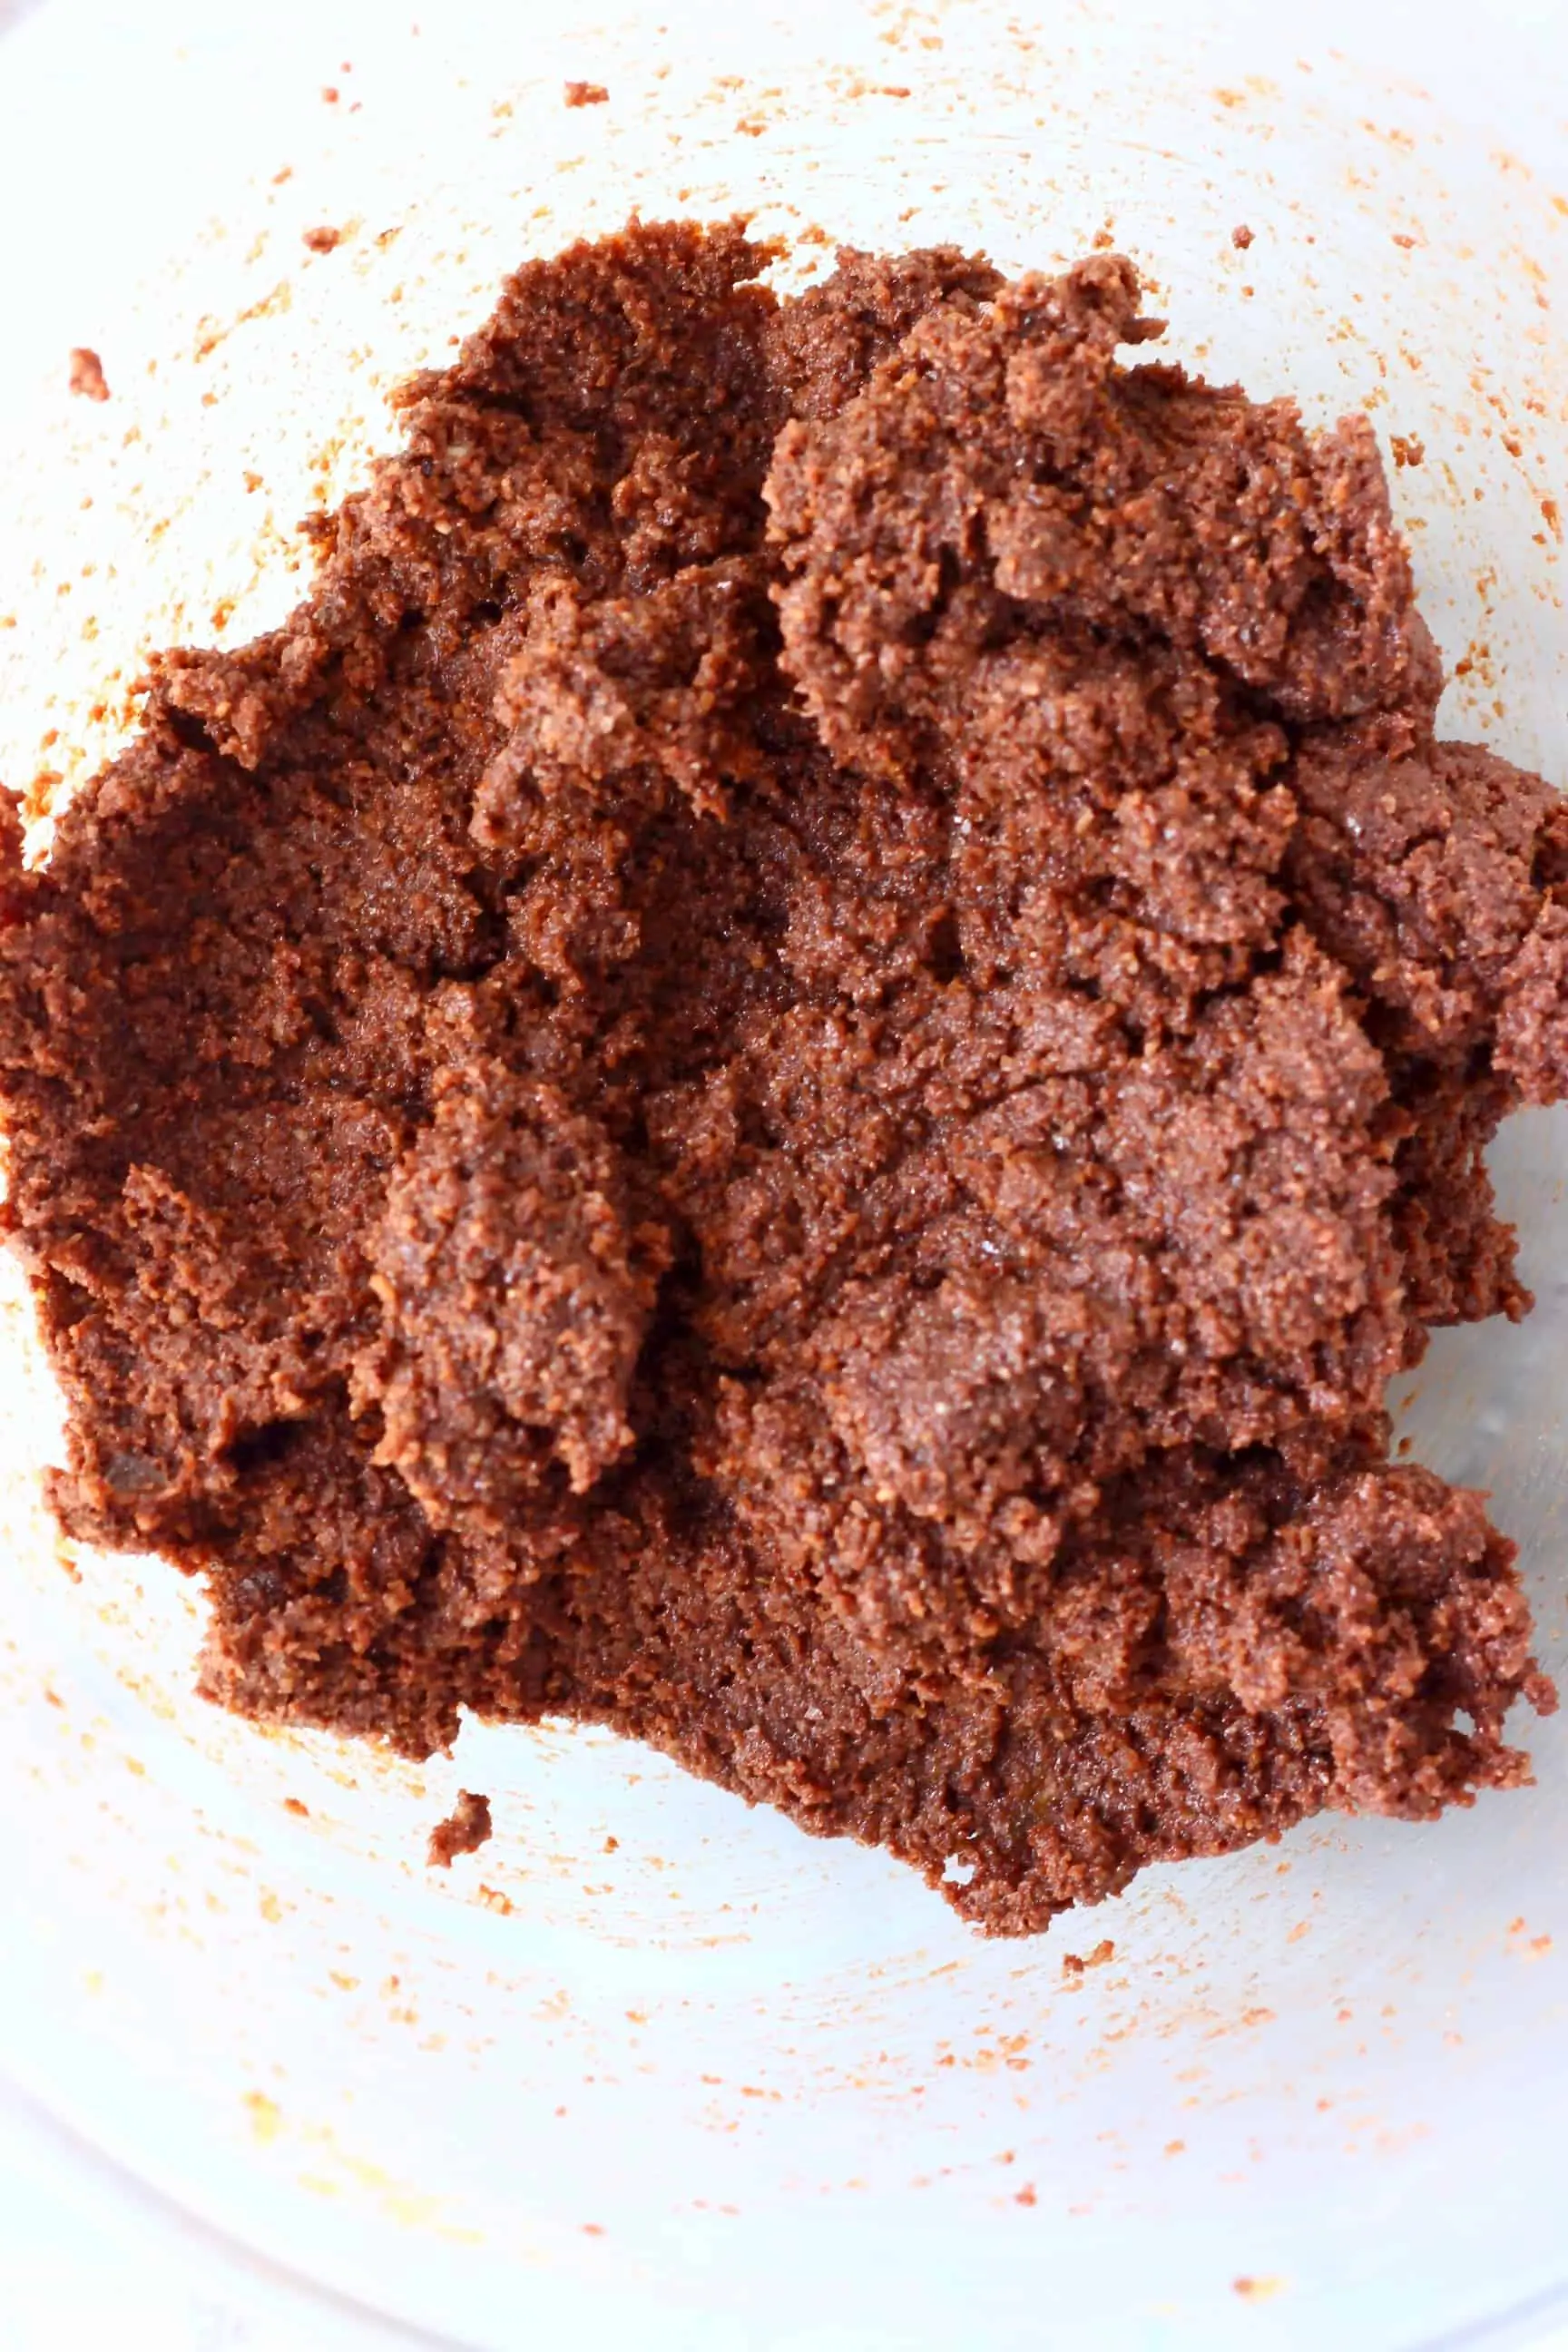 Raw gluten-free vegan chocolate torte batter in a glass mixing bowl